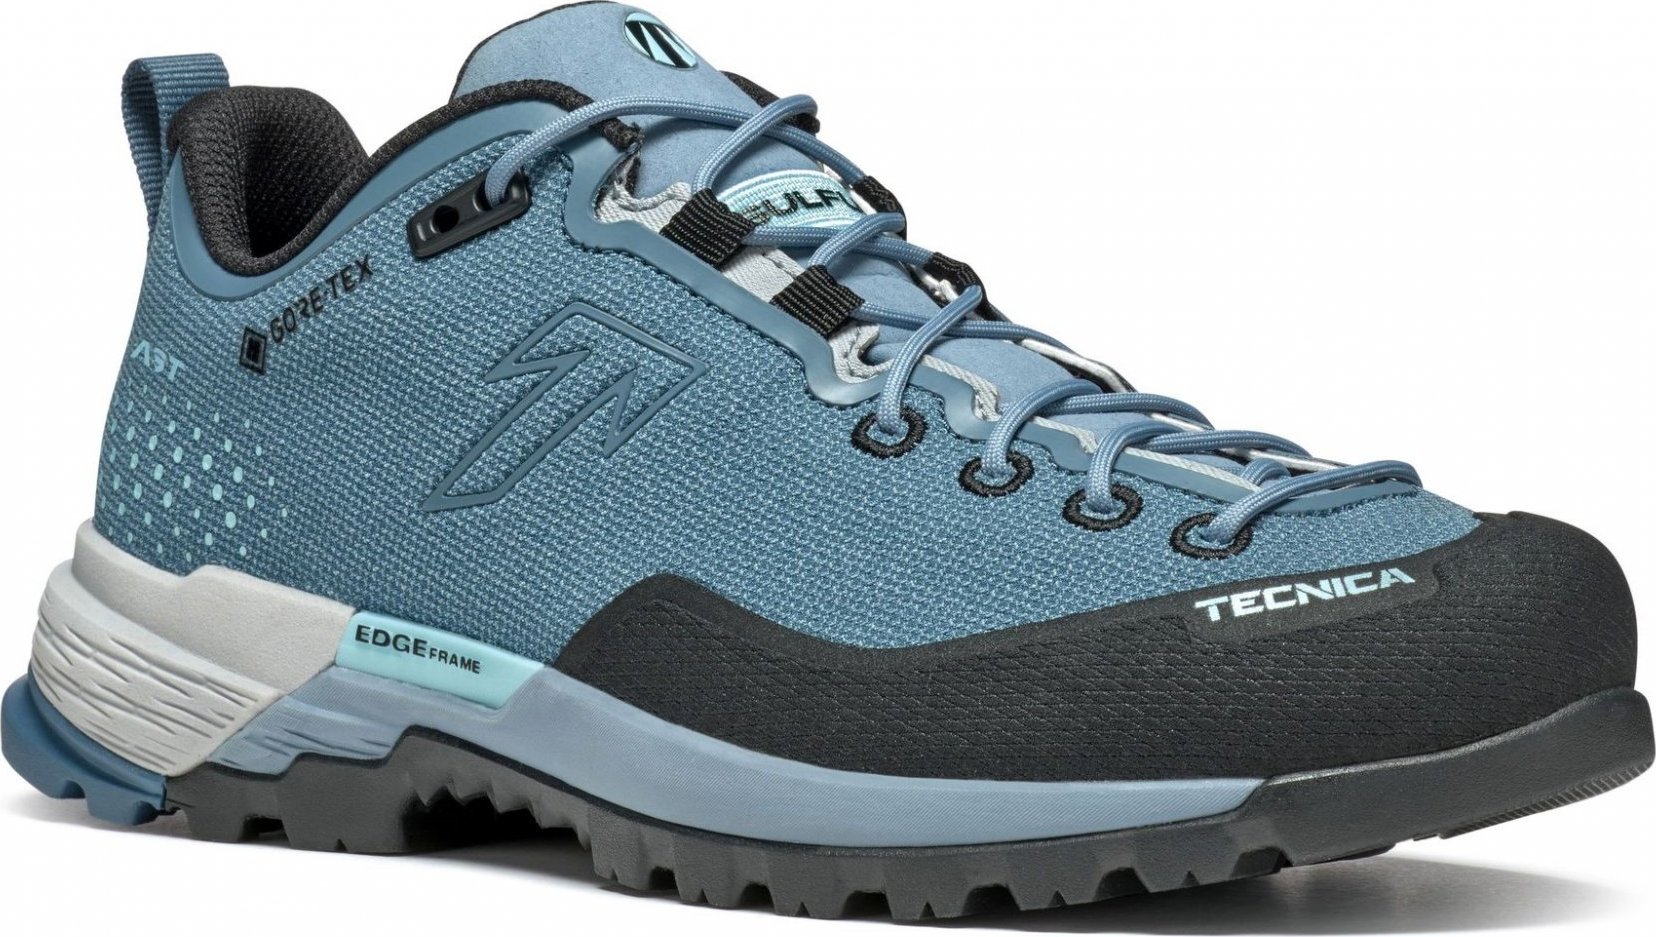 Dámské trekové boty TECNICA Sulfur S GTX Ws, 001 progressive blue/soft grey Velikost: 42